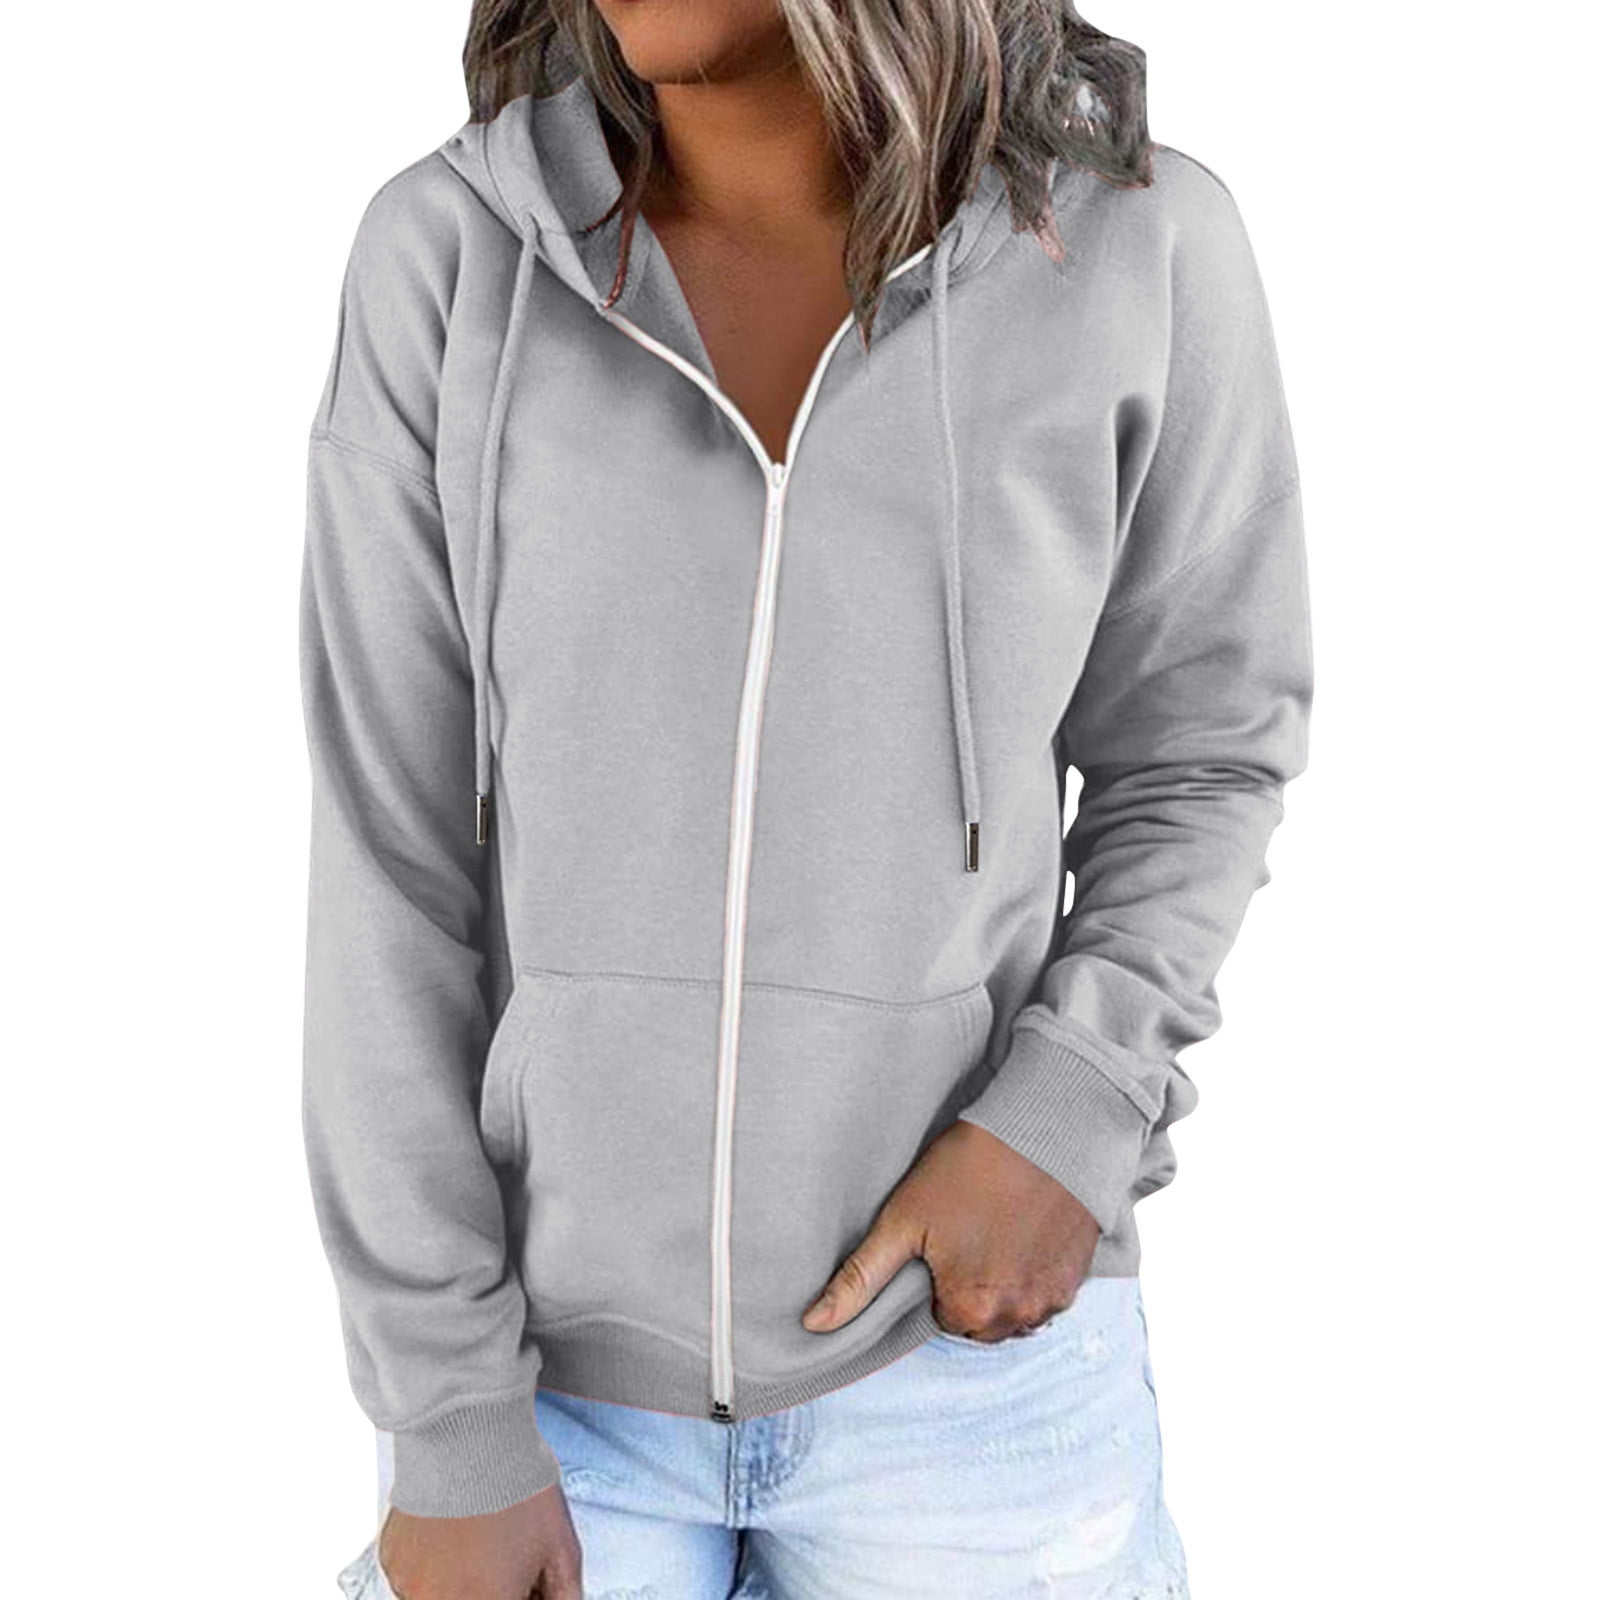 yoeyez Cute Hoodies for Teen Girls Trendy Warm Fall Winter Fashion  Sweatshirt Loose Fit Long Sleeve Winter Pullover